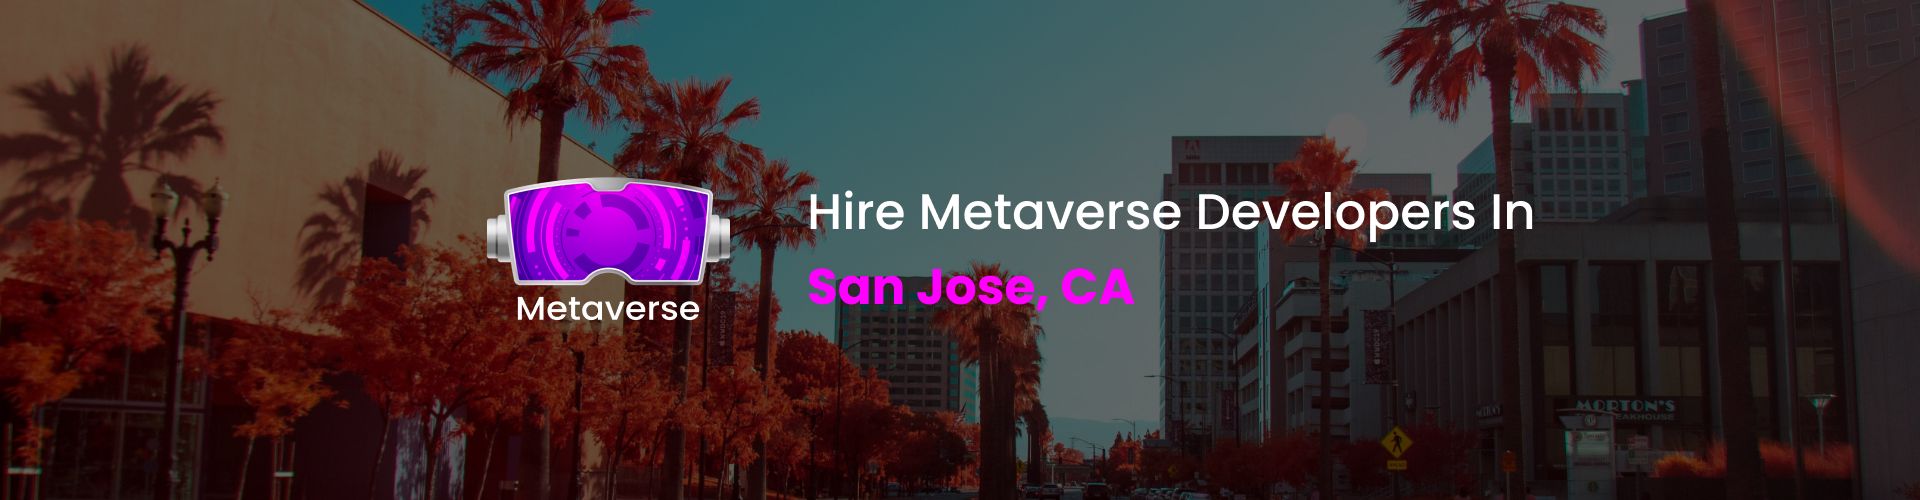 hire metaverse developers in san jose